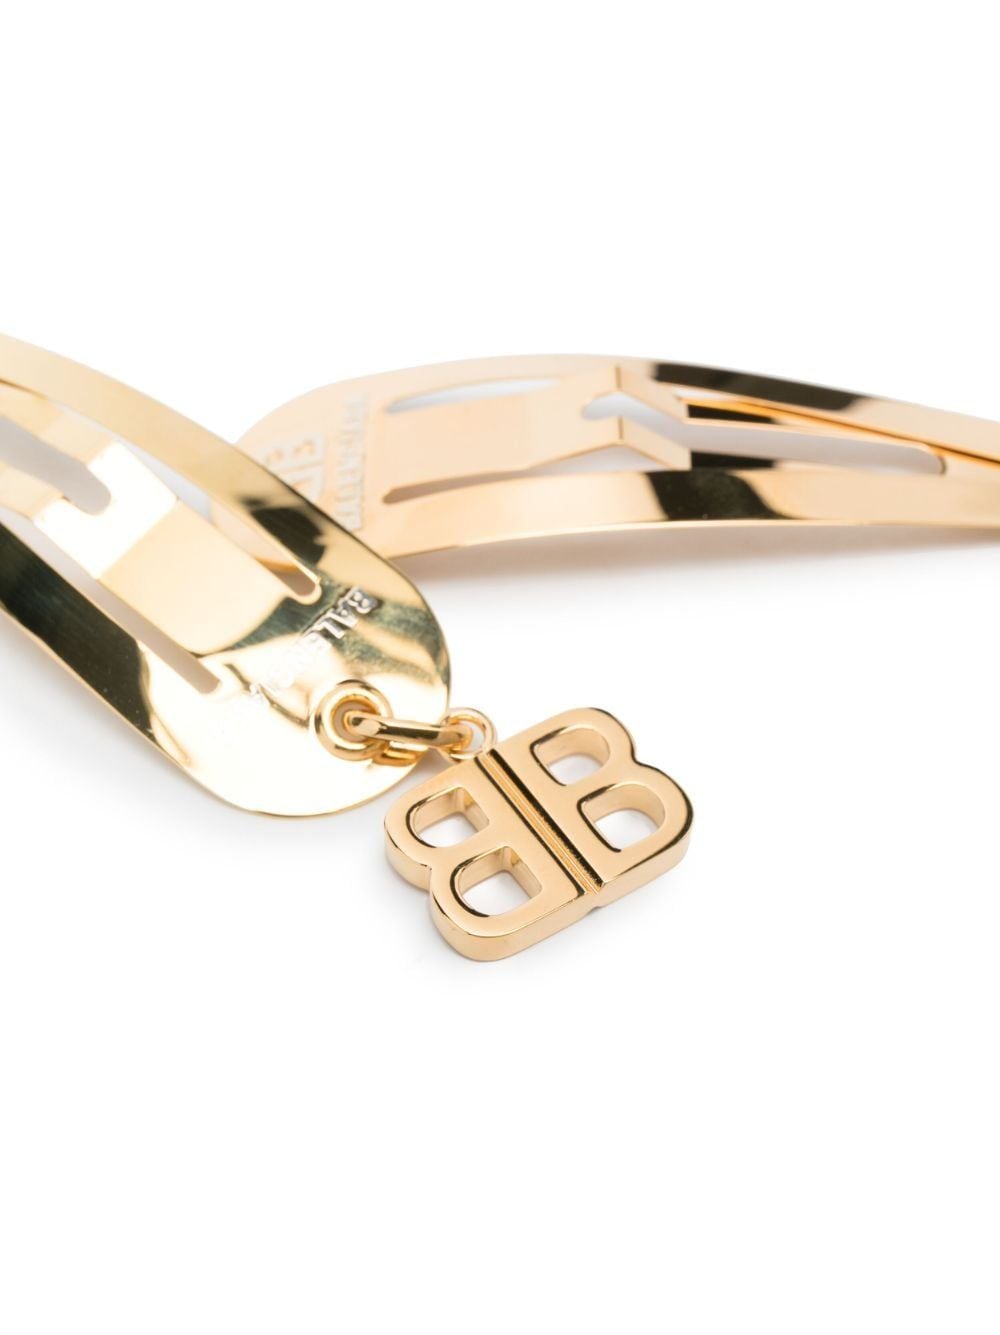 Balenciaga Clip Cut out-detail Bracelet - Gold